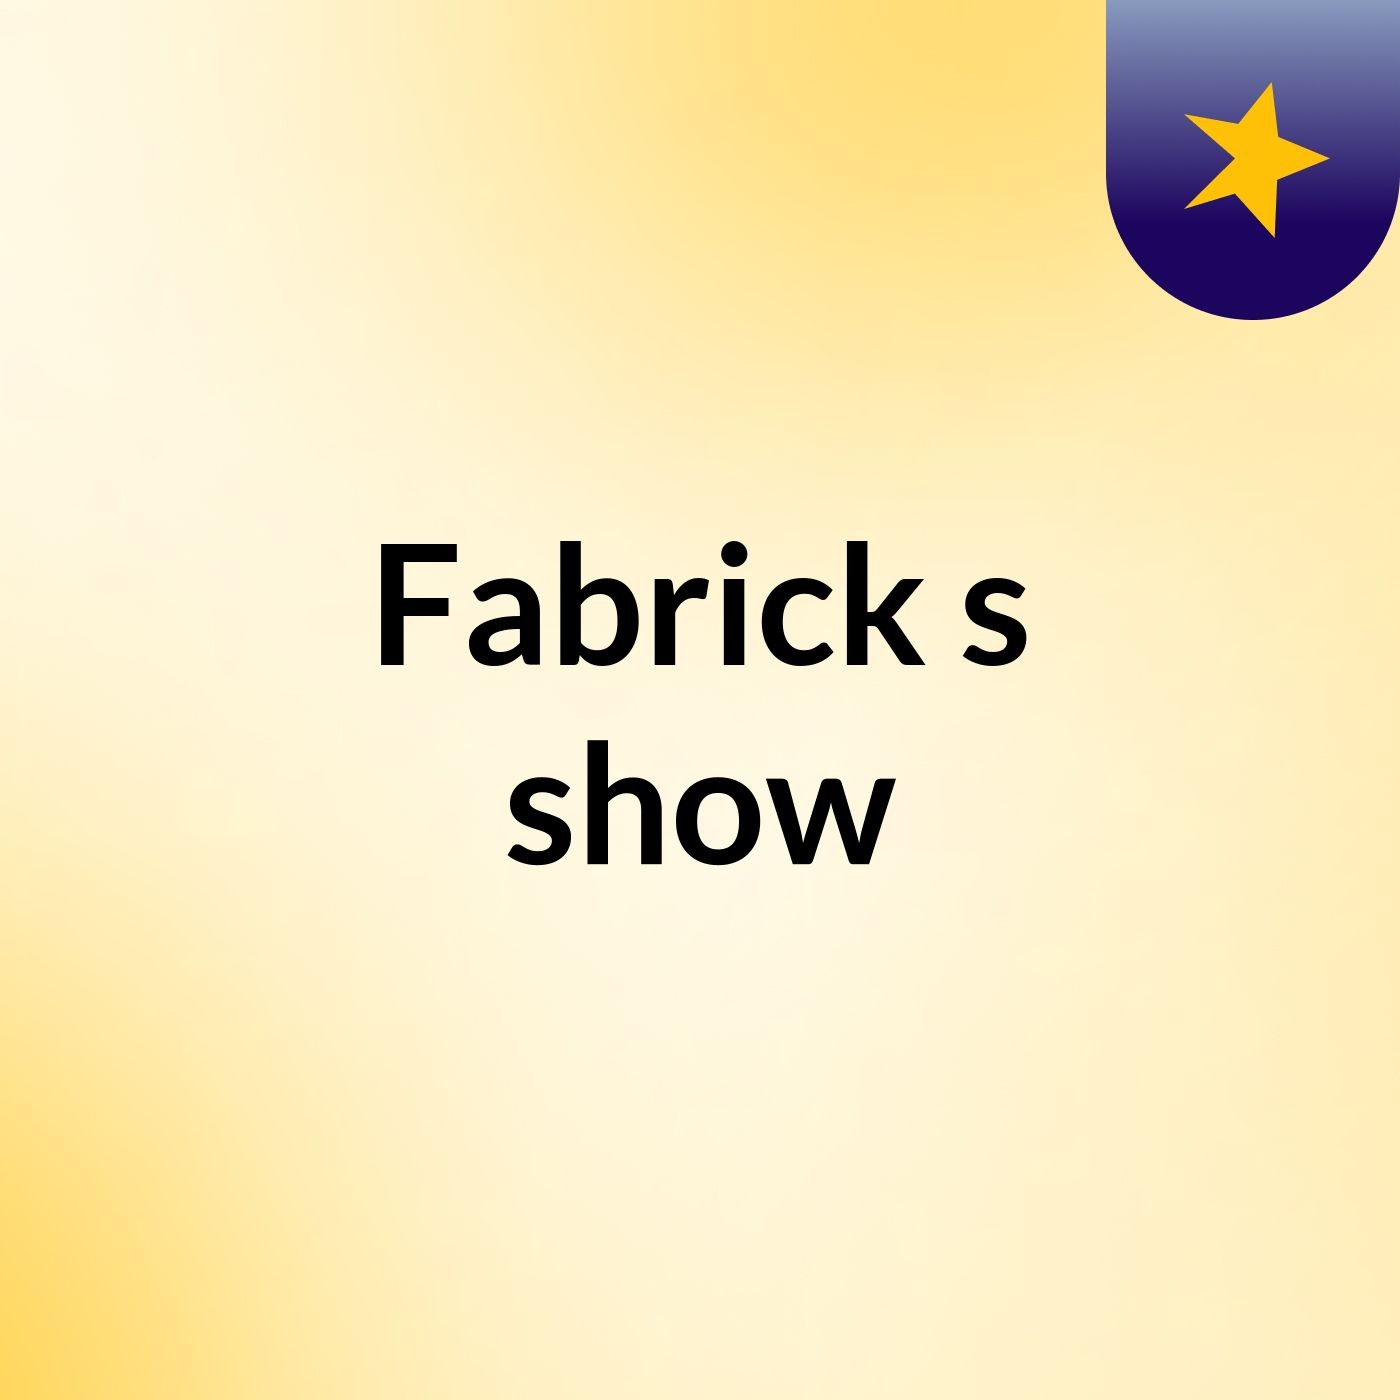 Fabrick's show